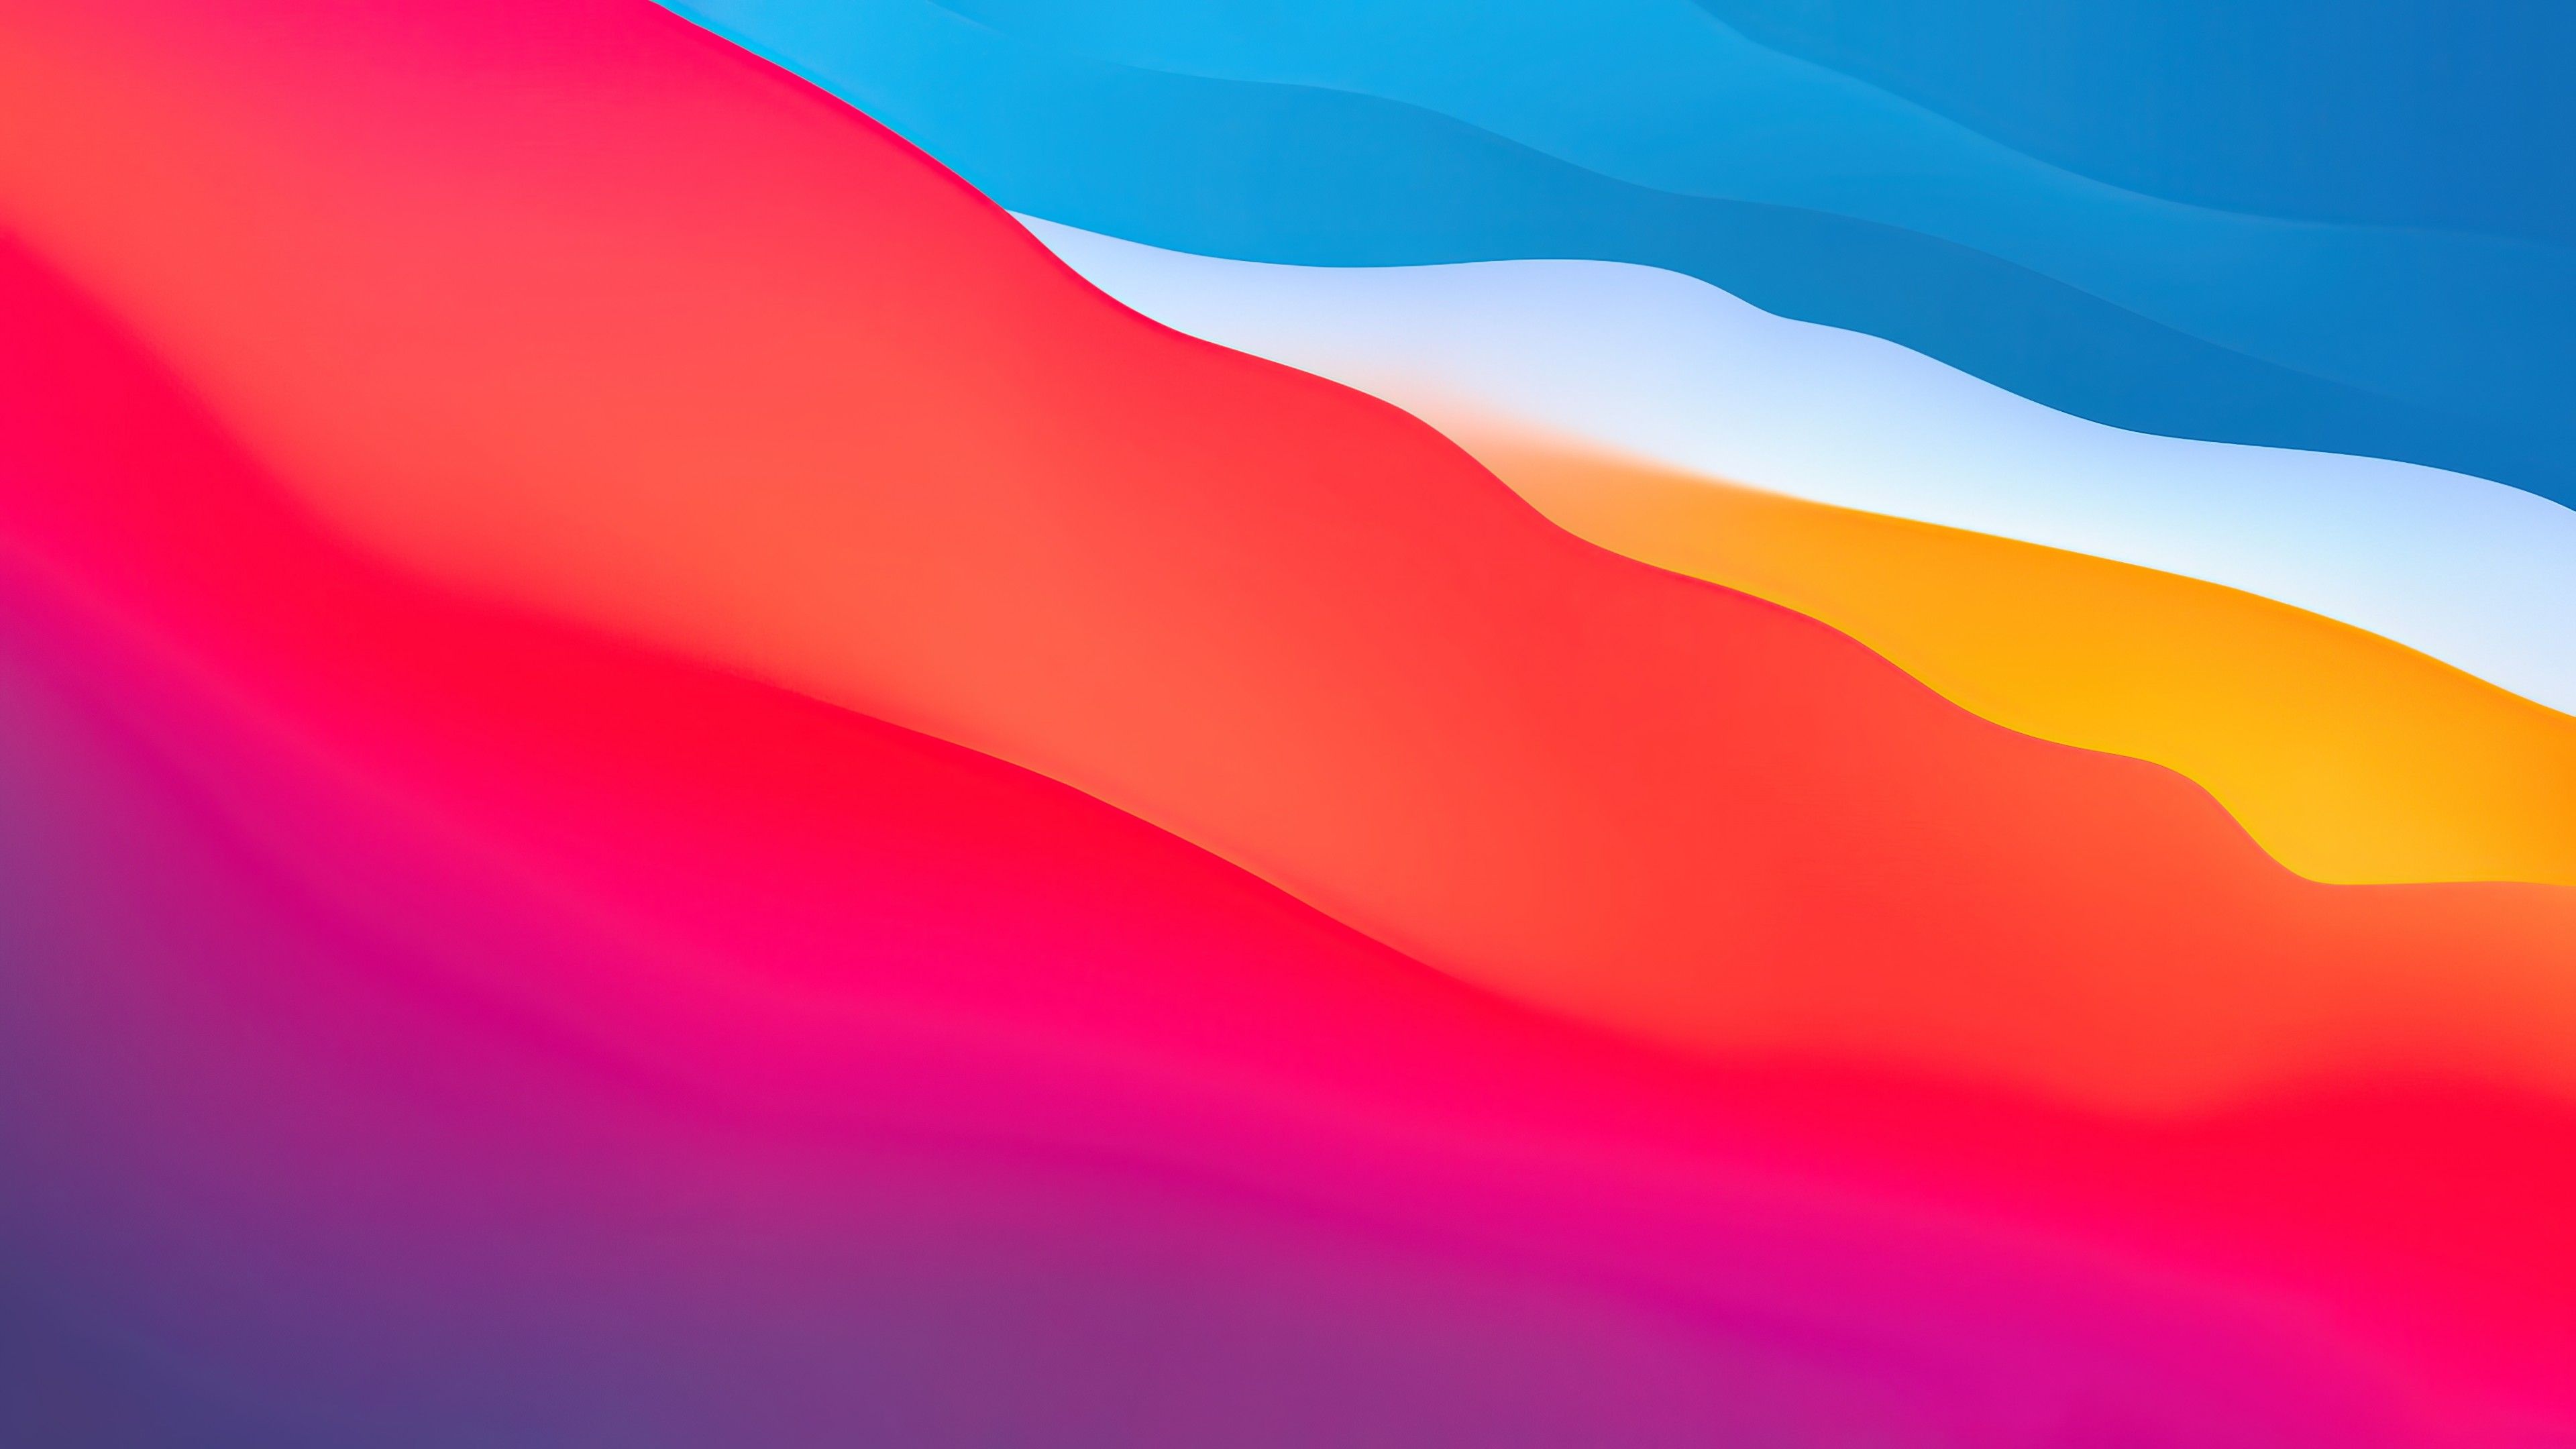 4K MacOS Big Sur Wallpaper - KoLPaPer - Awesome Free HD Wallpapers